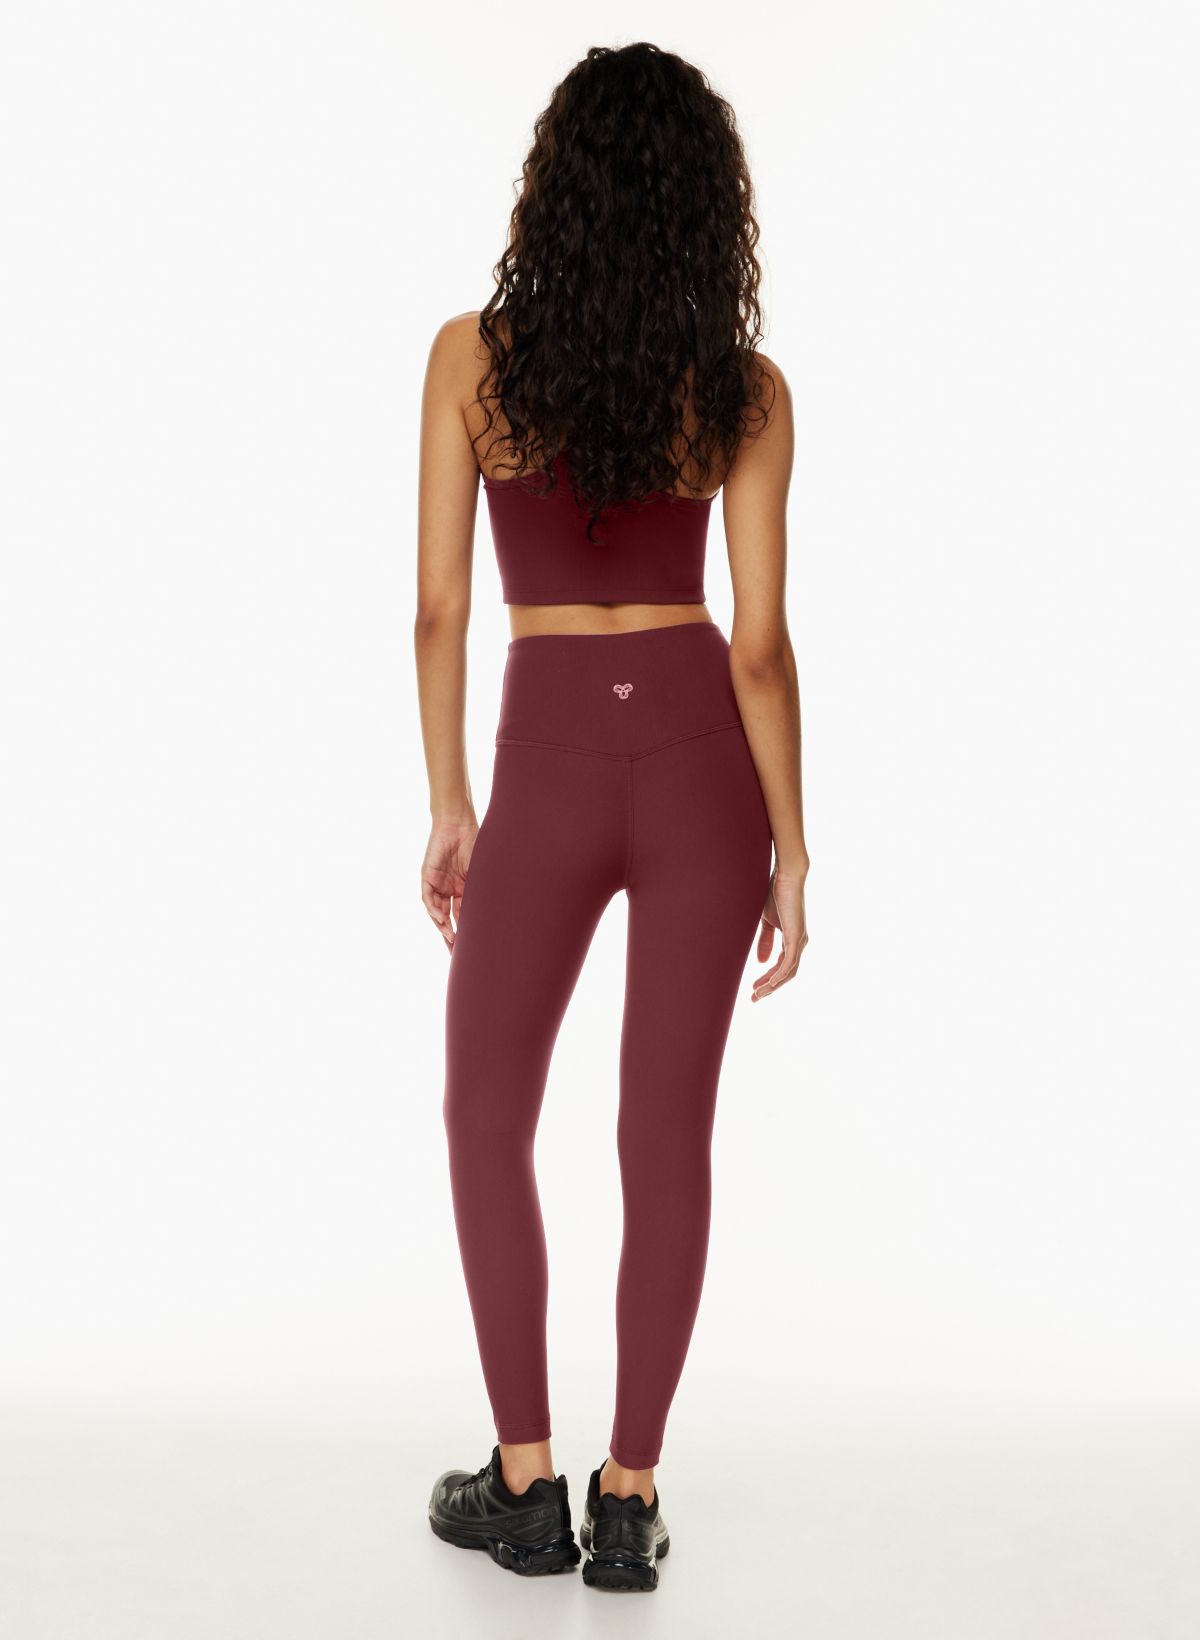 Lululemon Align Crop Deep Rouge Burgundy Red Yoga Fitness Woman’s Size 10